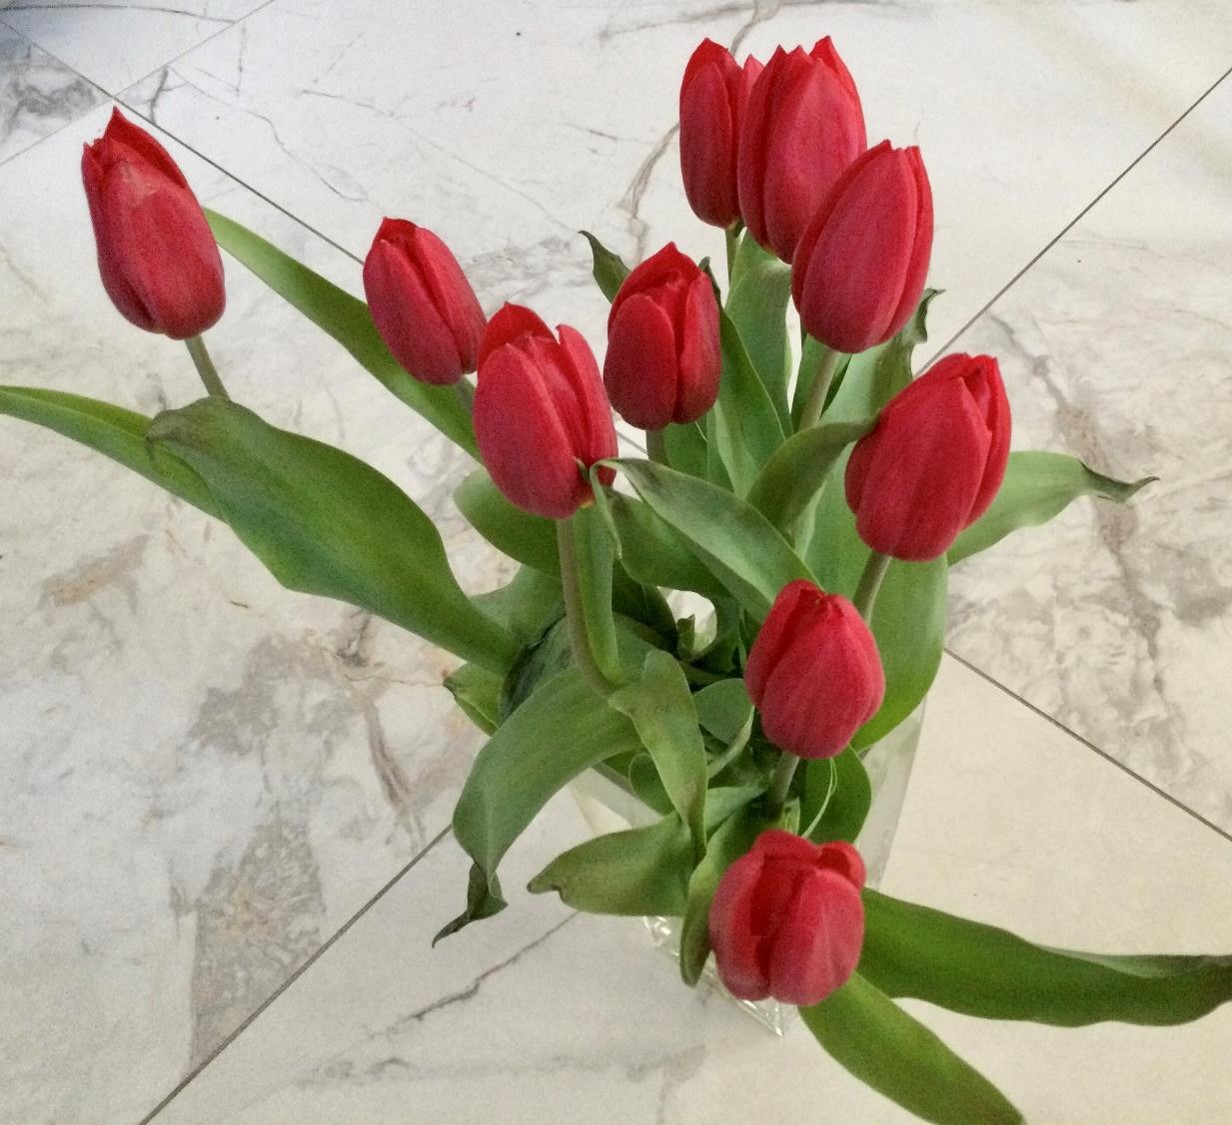 Tulipes (crédit photo Phrenssynnes)